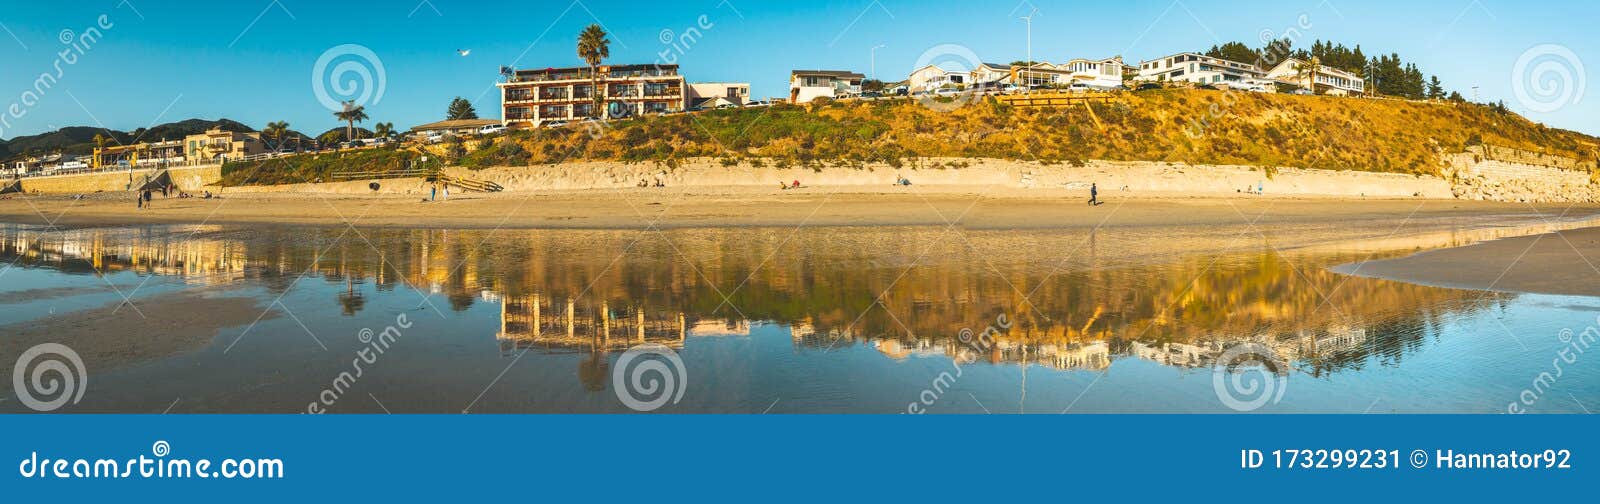 Avila Beach, Panorama. Beautiful Beach Town Located on the Beautiful